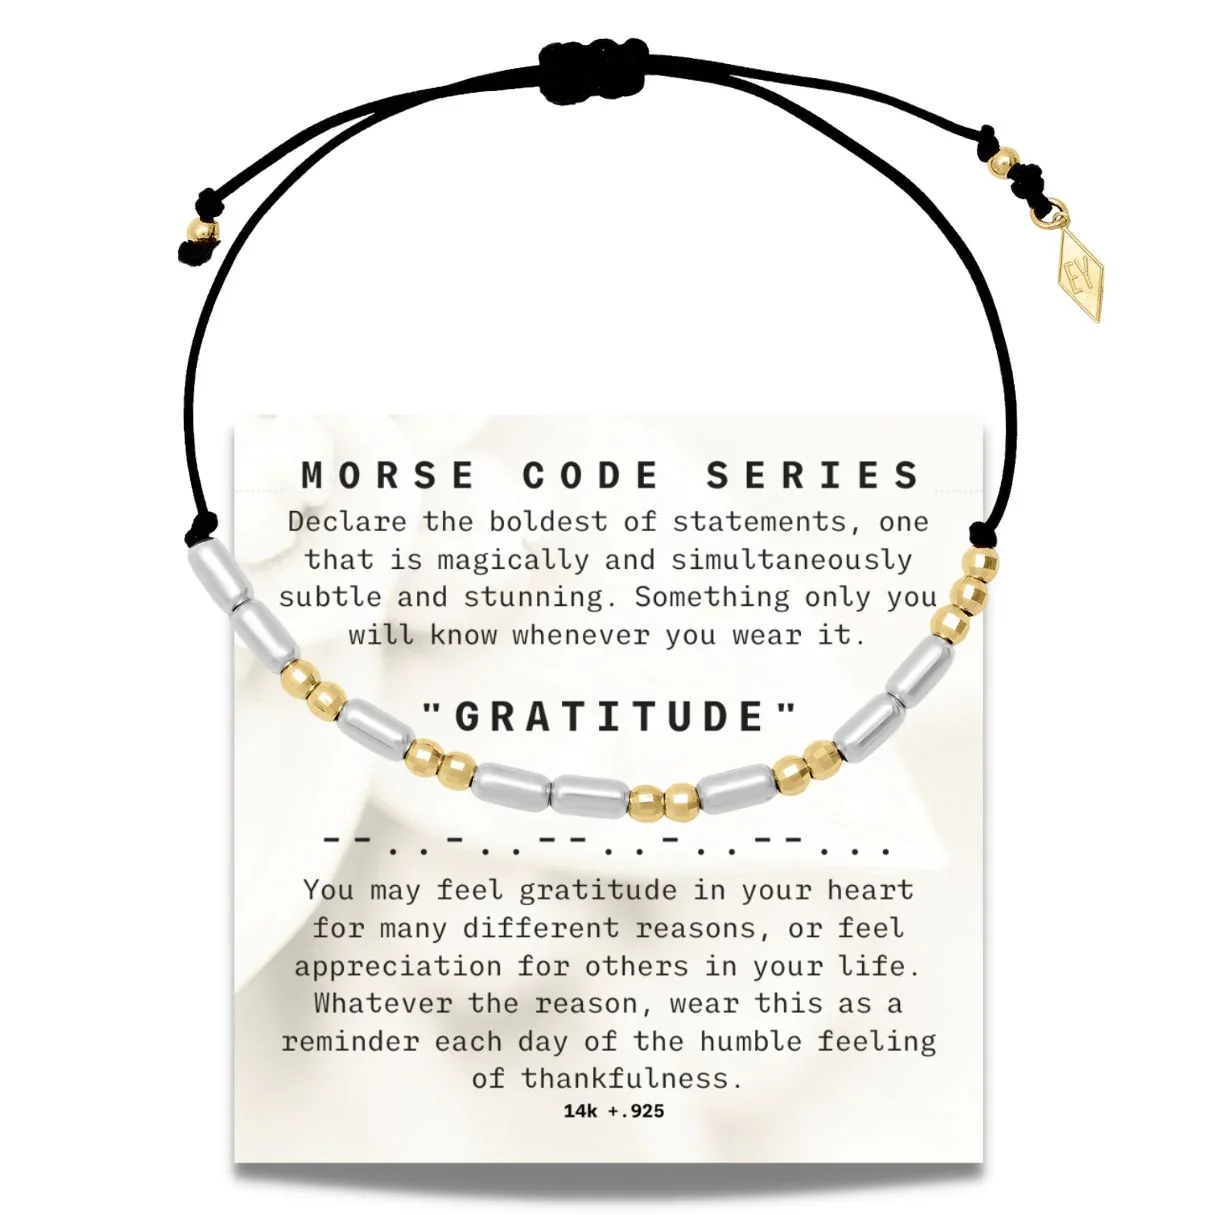 Image of "Morse Code" Series GRATITUDE Bracelet